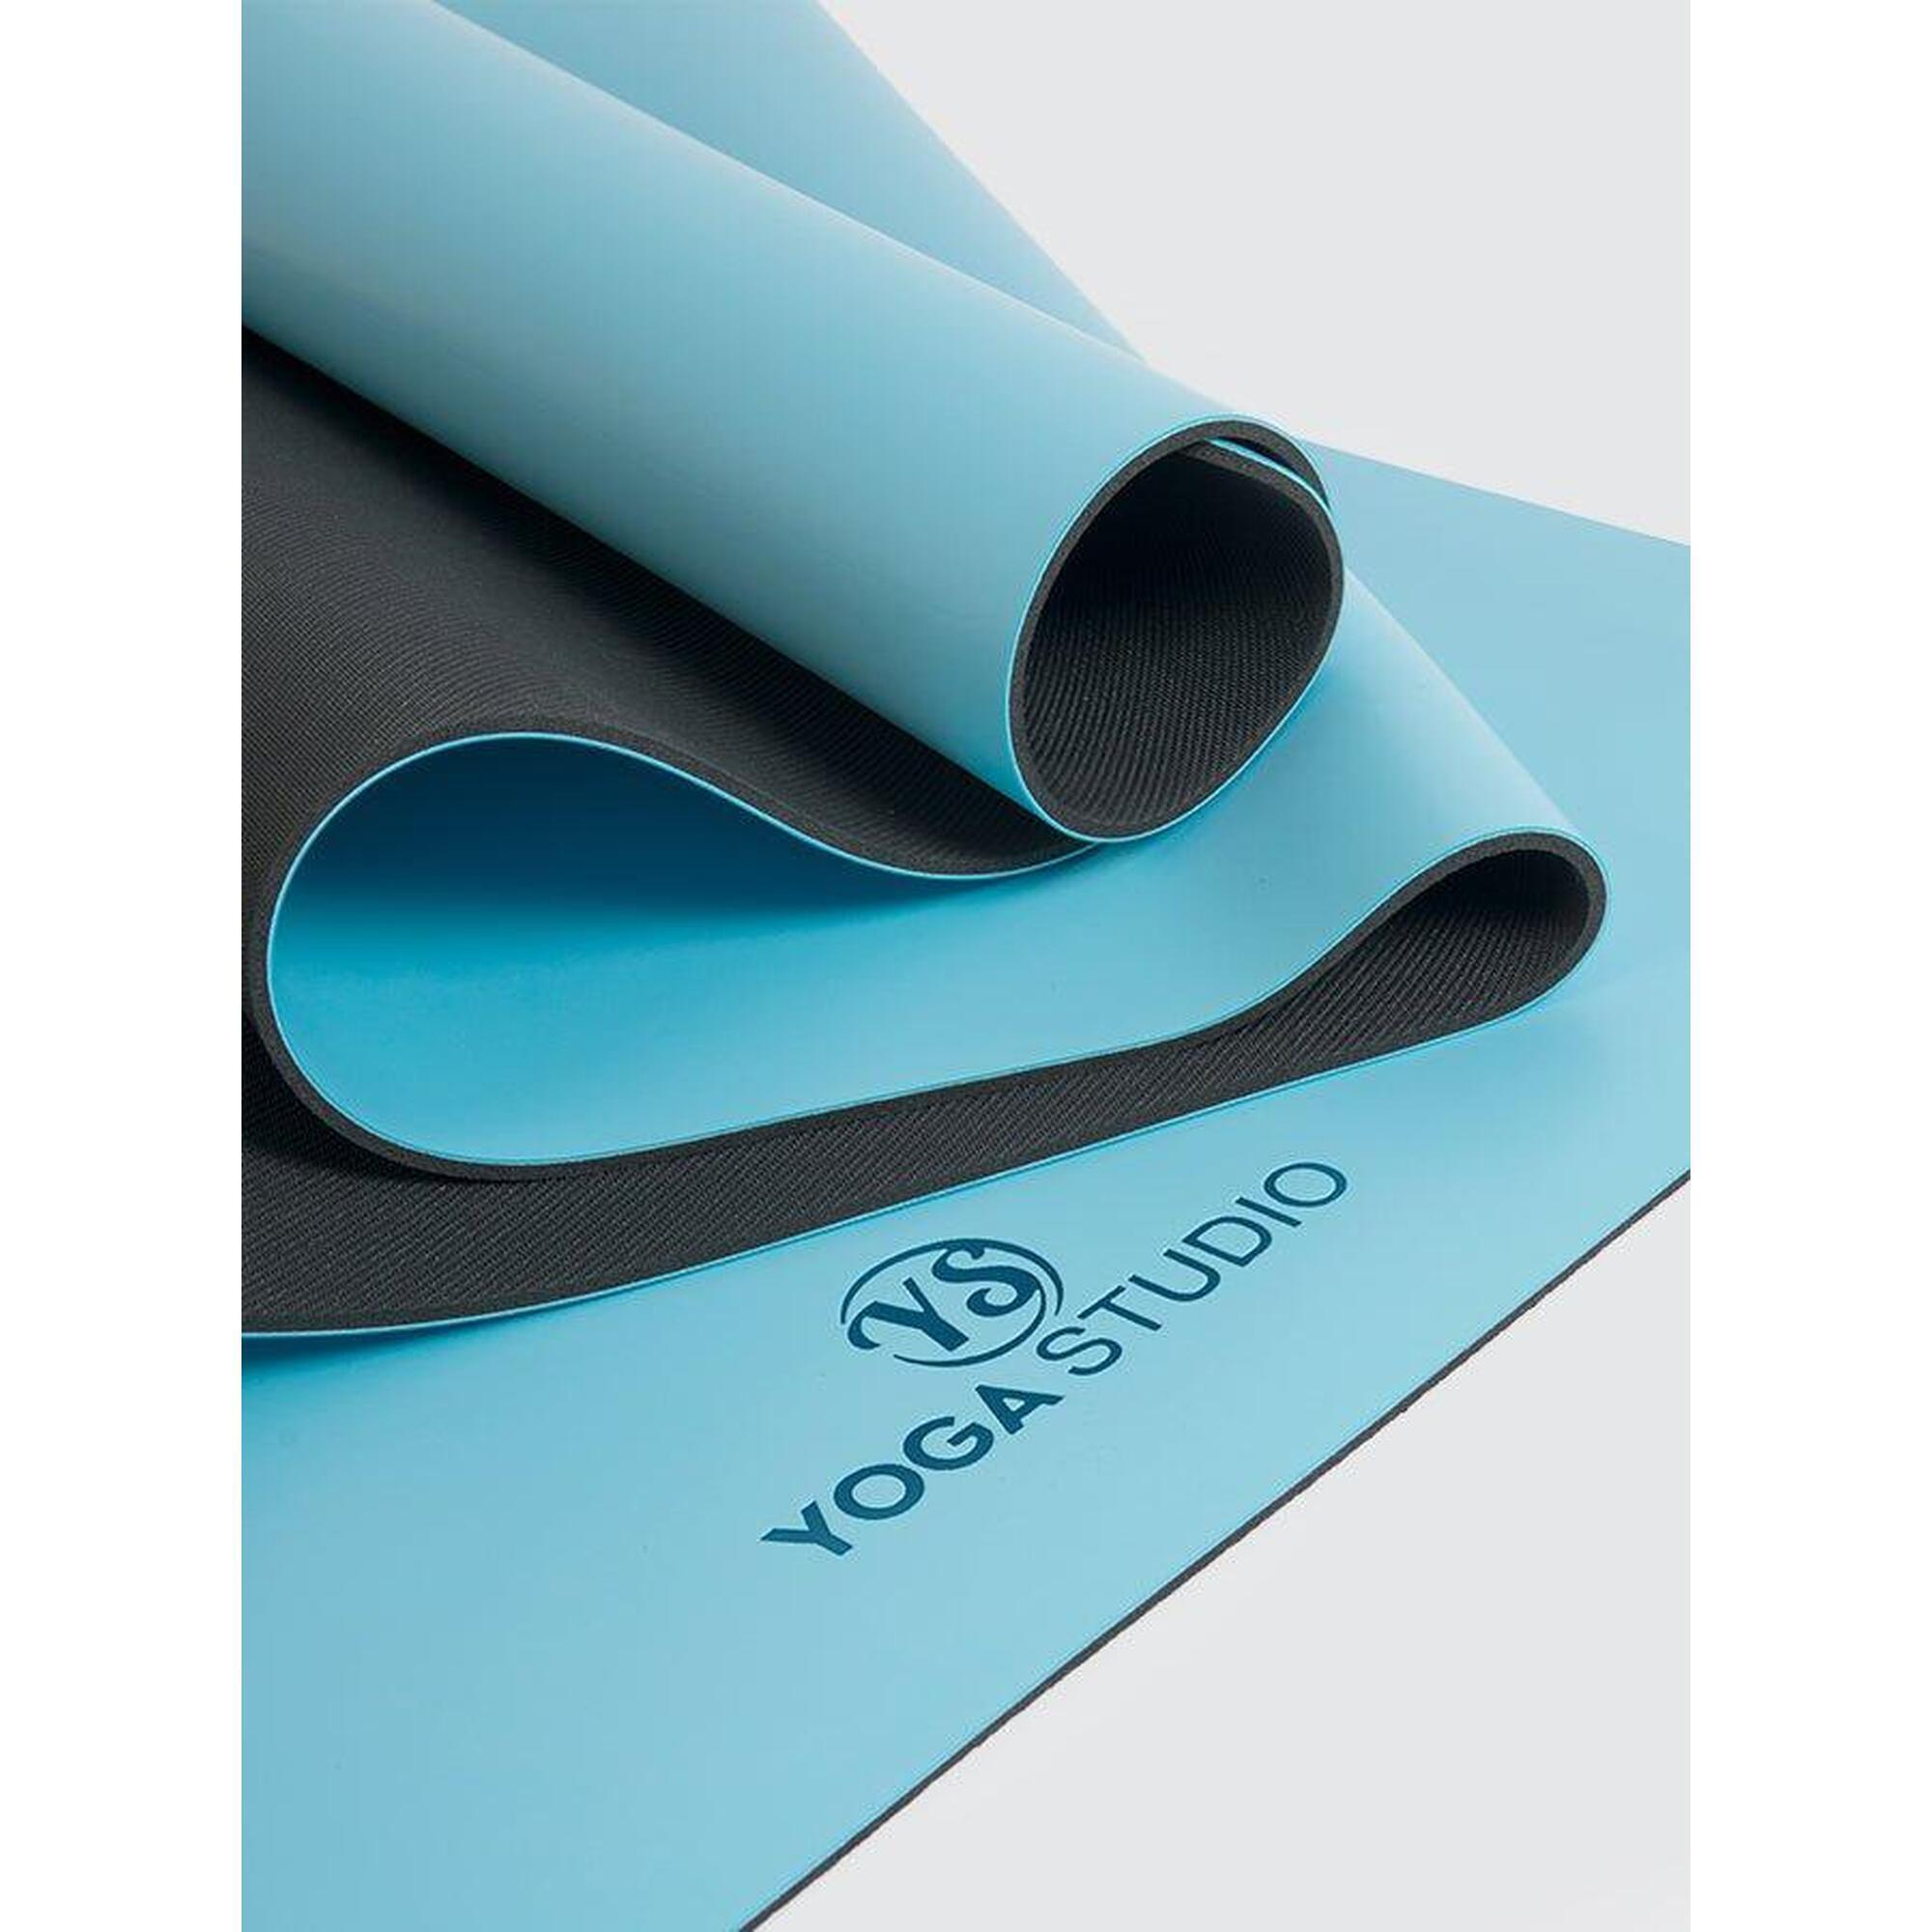 YOGA STUDIO Yoga Studio The Grip Compact Yoga Mat 4mm - Blue